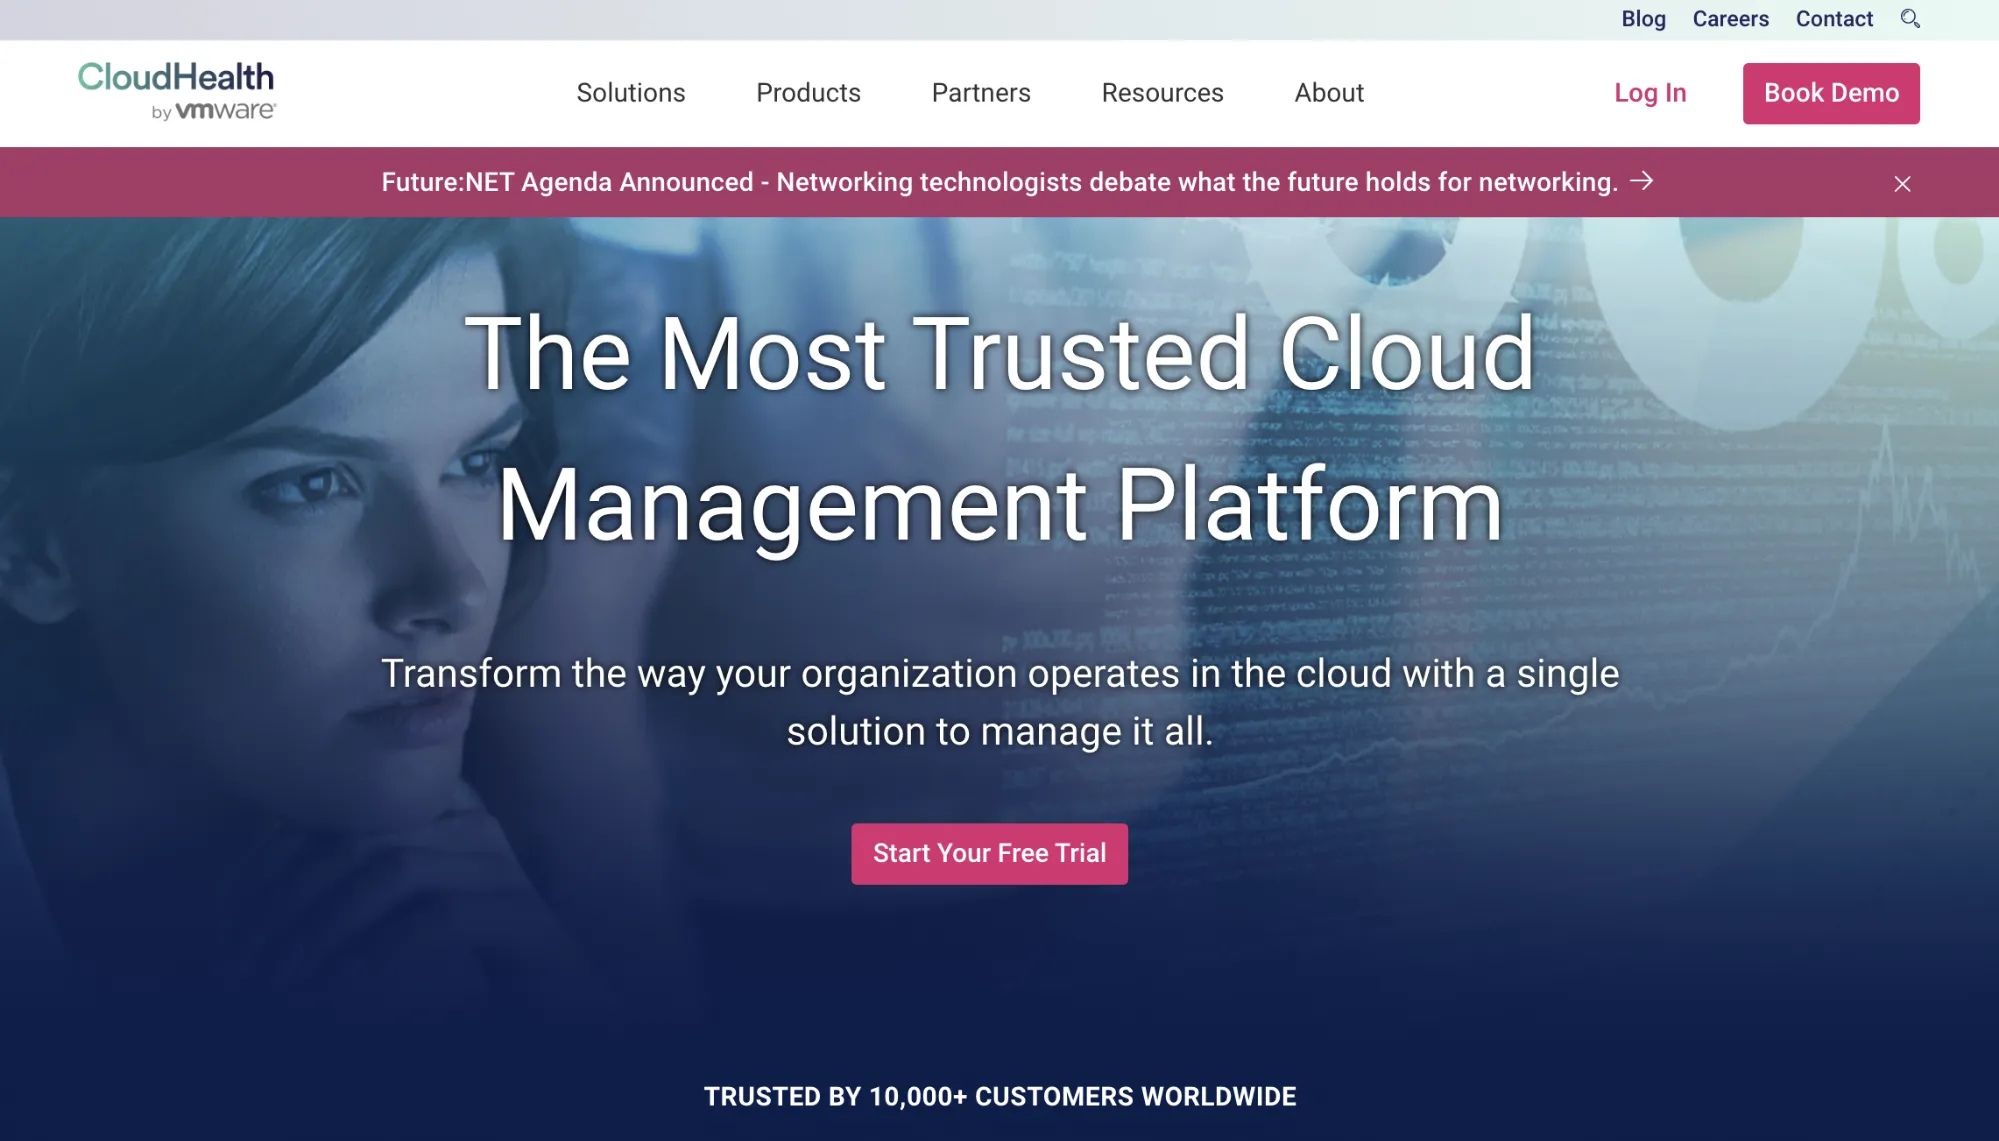 VMware CloudHealth